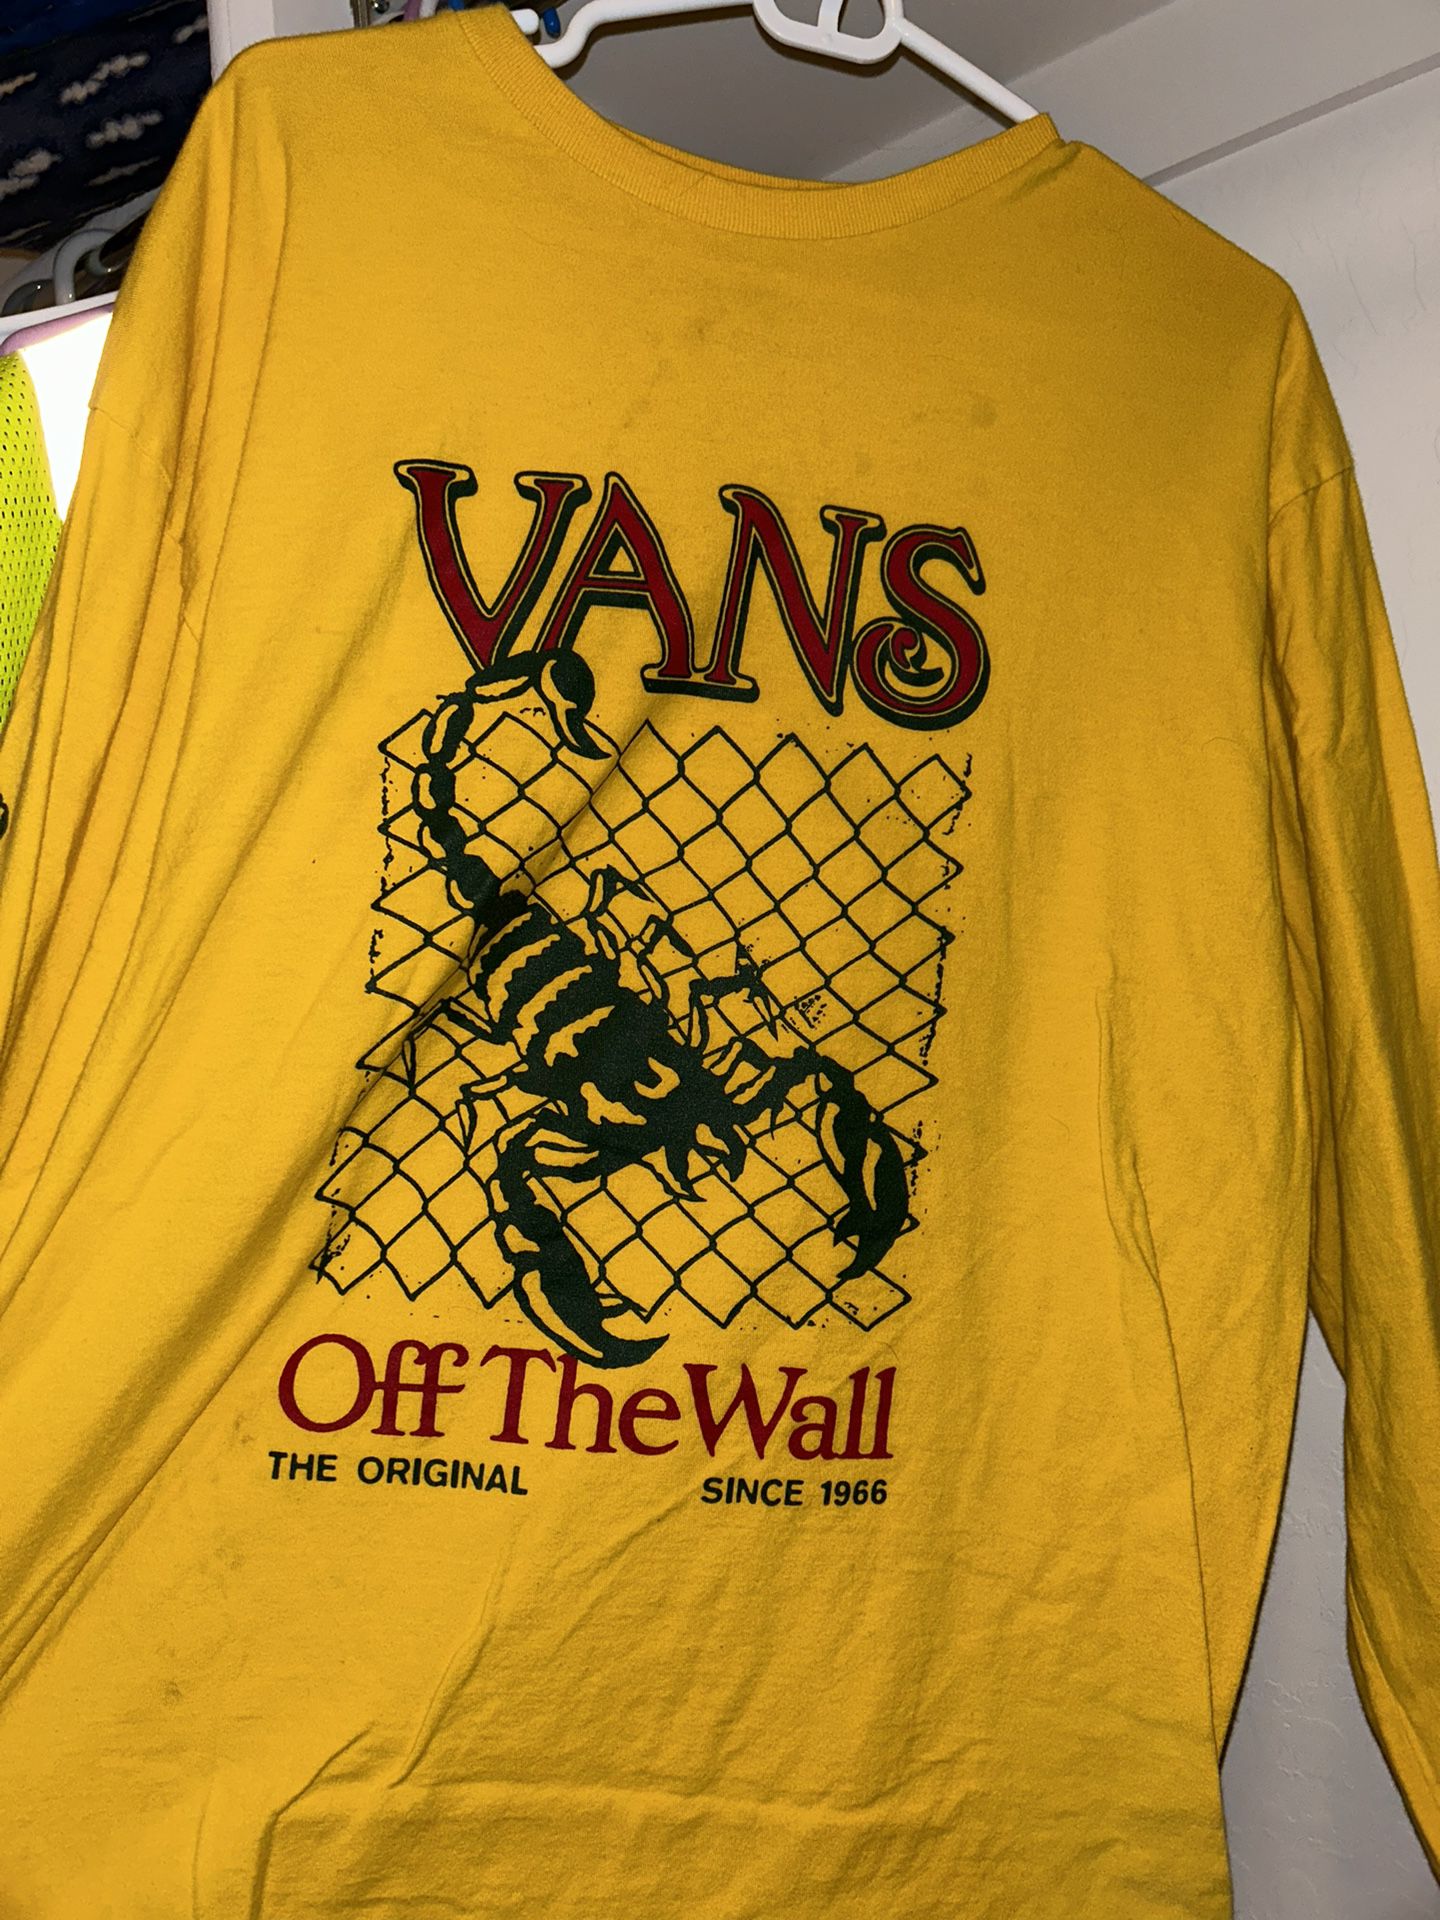 VANS Long Sleeve Shirt w/ Scorpion for in Henderson, NV - OfferUp